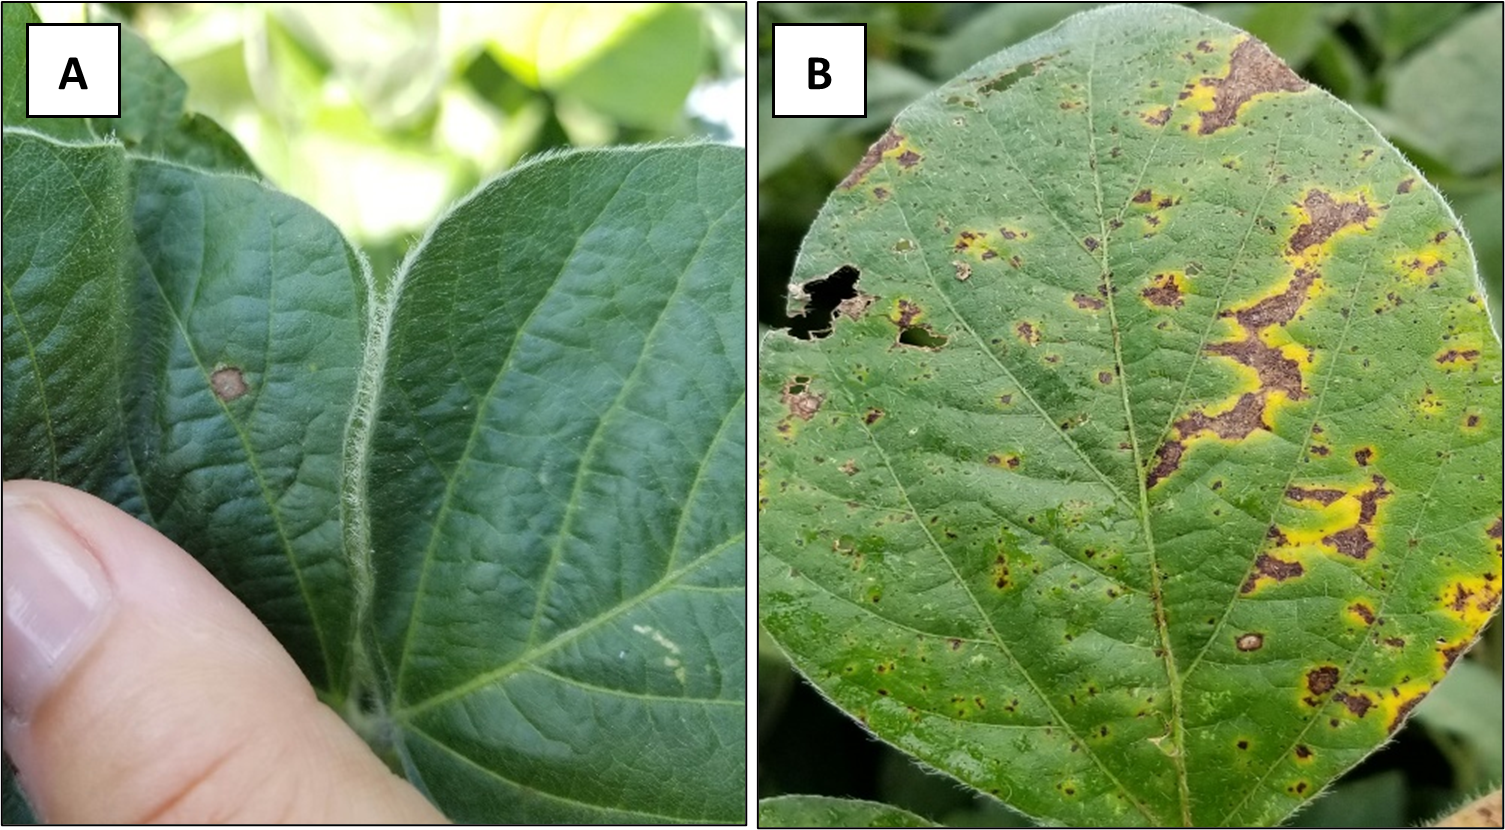 Figure 2. Foliar diseases to watch for in soybean A. frogeye leaf spot, B Septoria brown spot. (Photo Credit: Darcy Telenko)